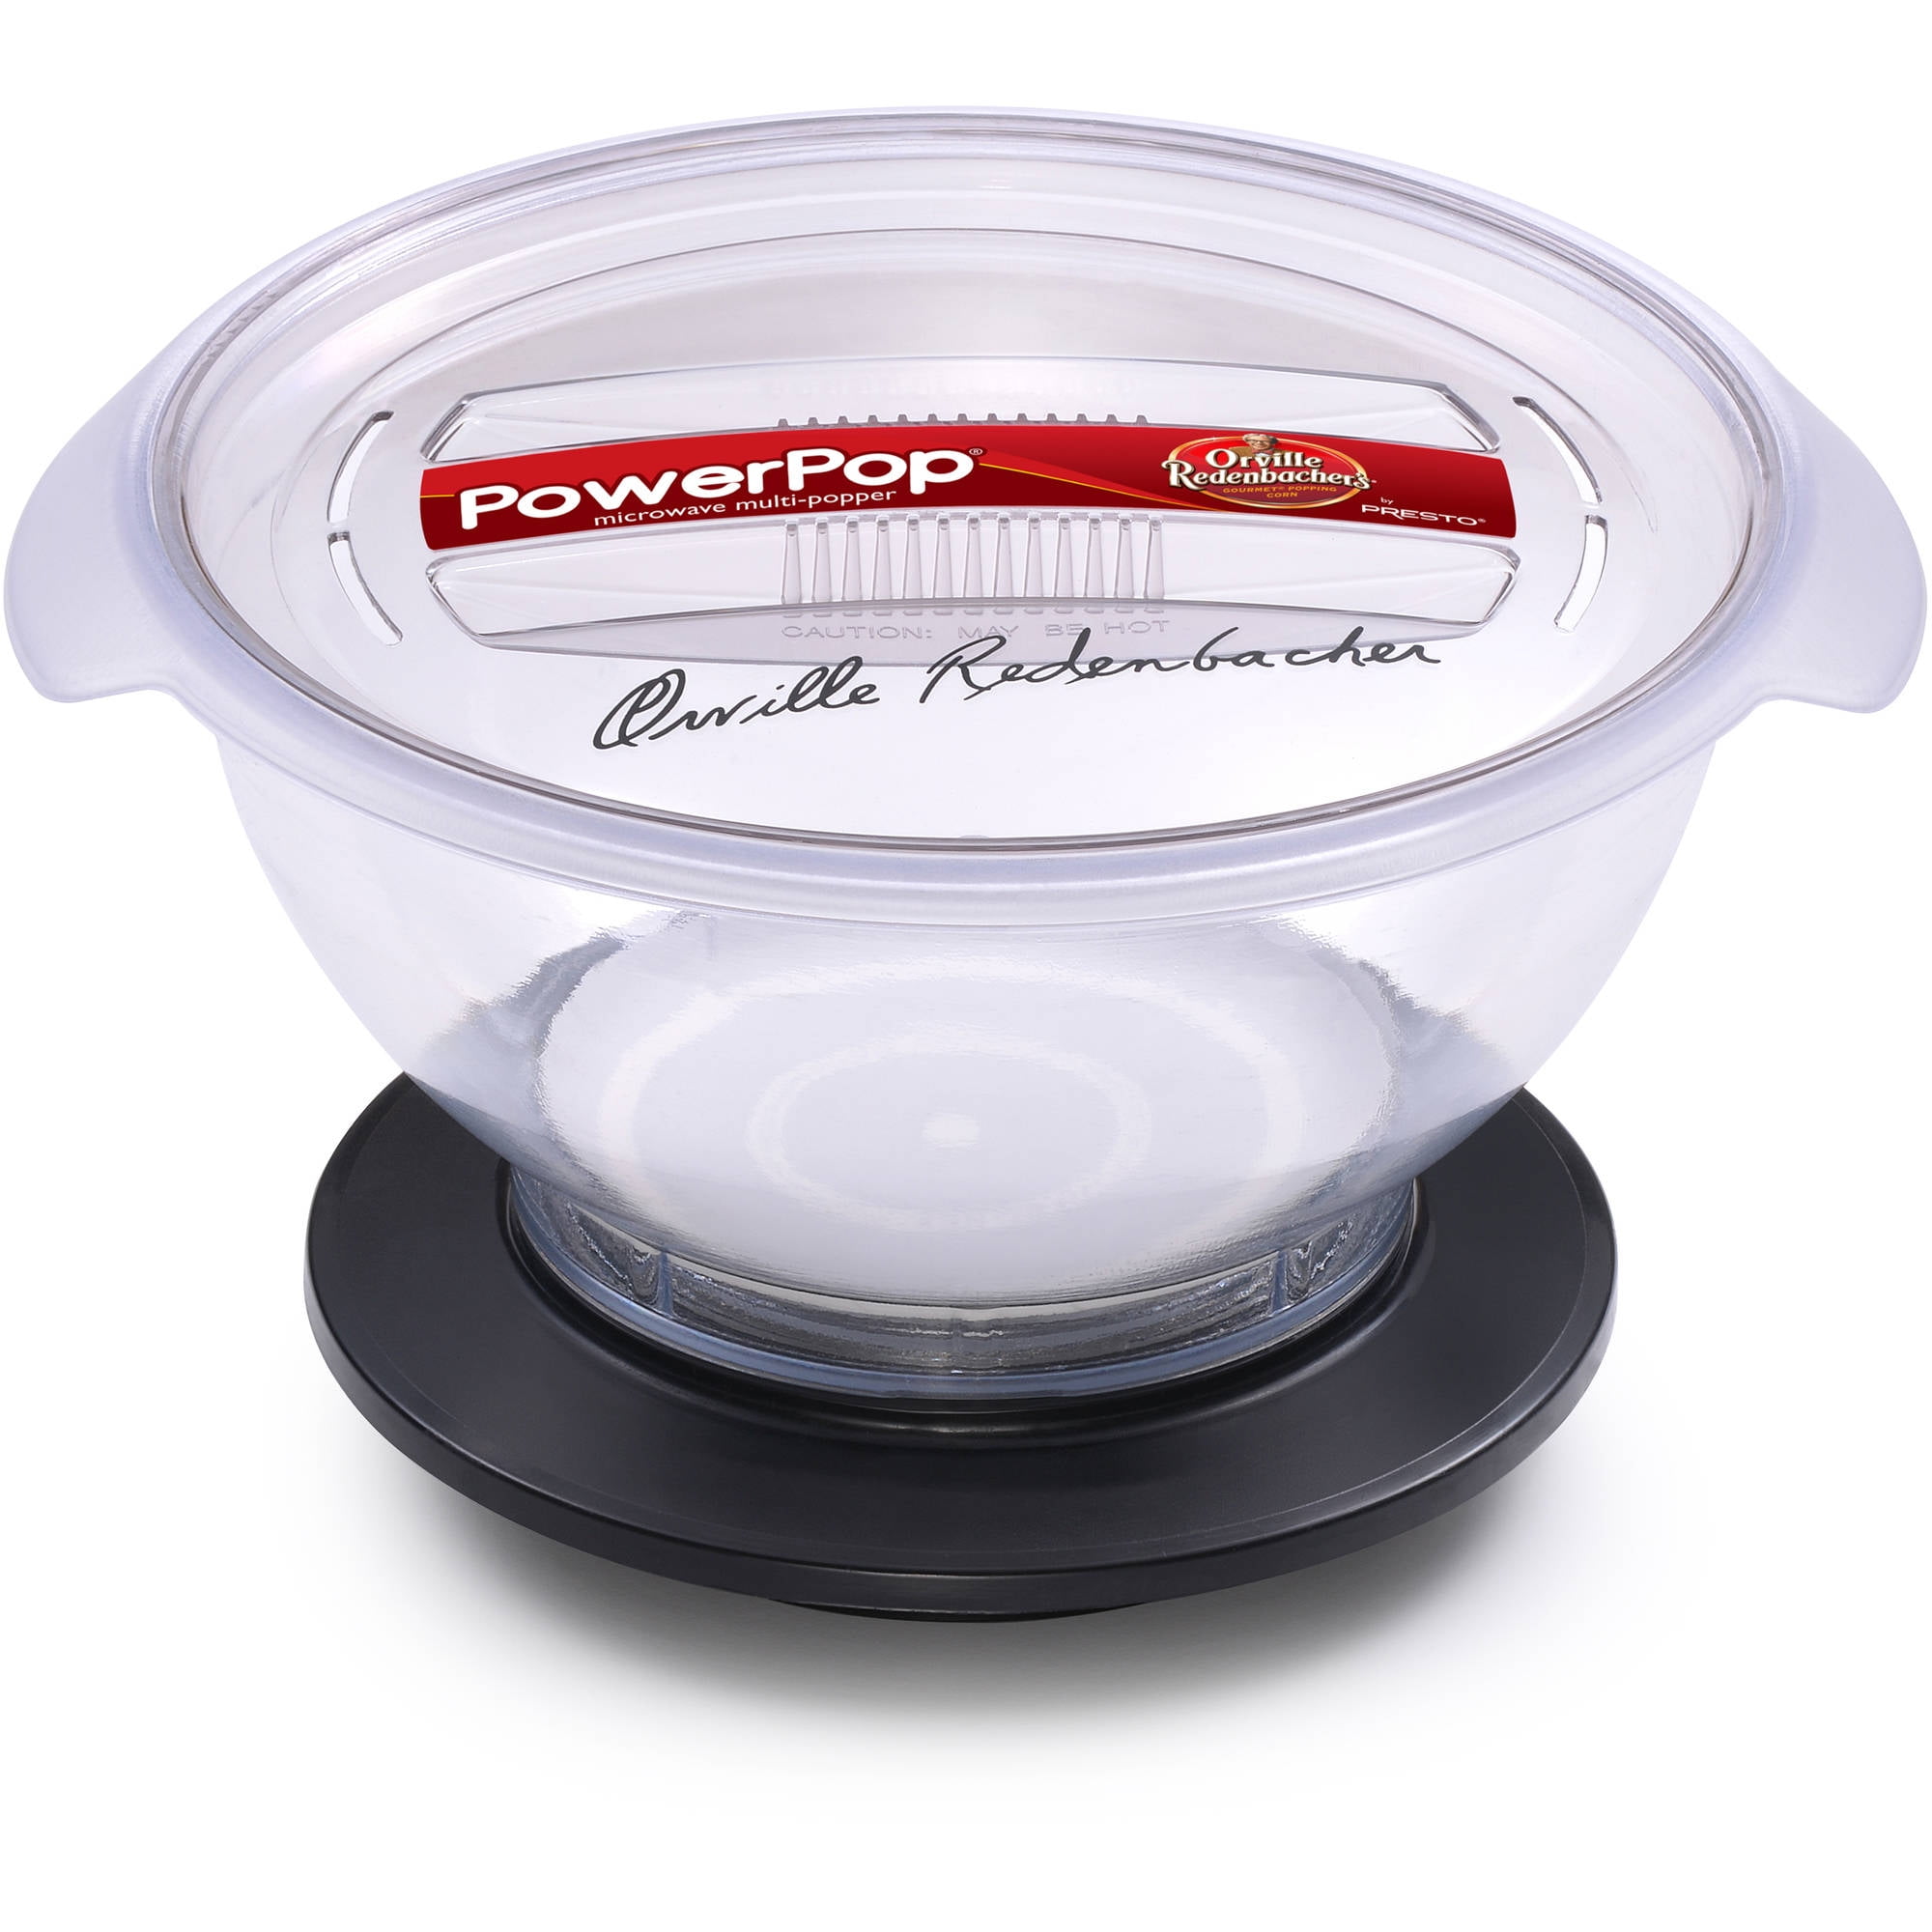 Orville Redenbacher's Microwave Popcorn Popper by Presto